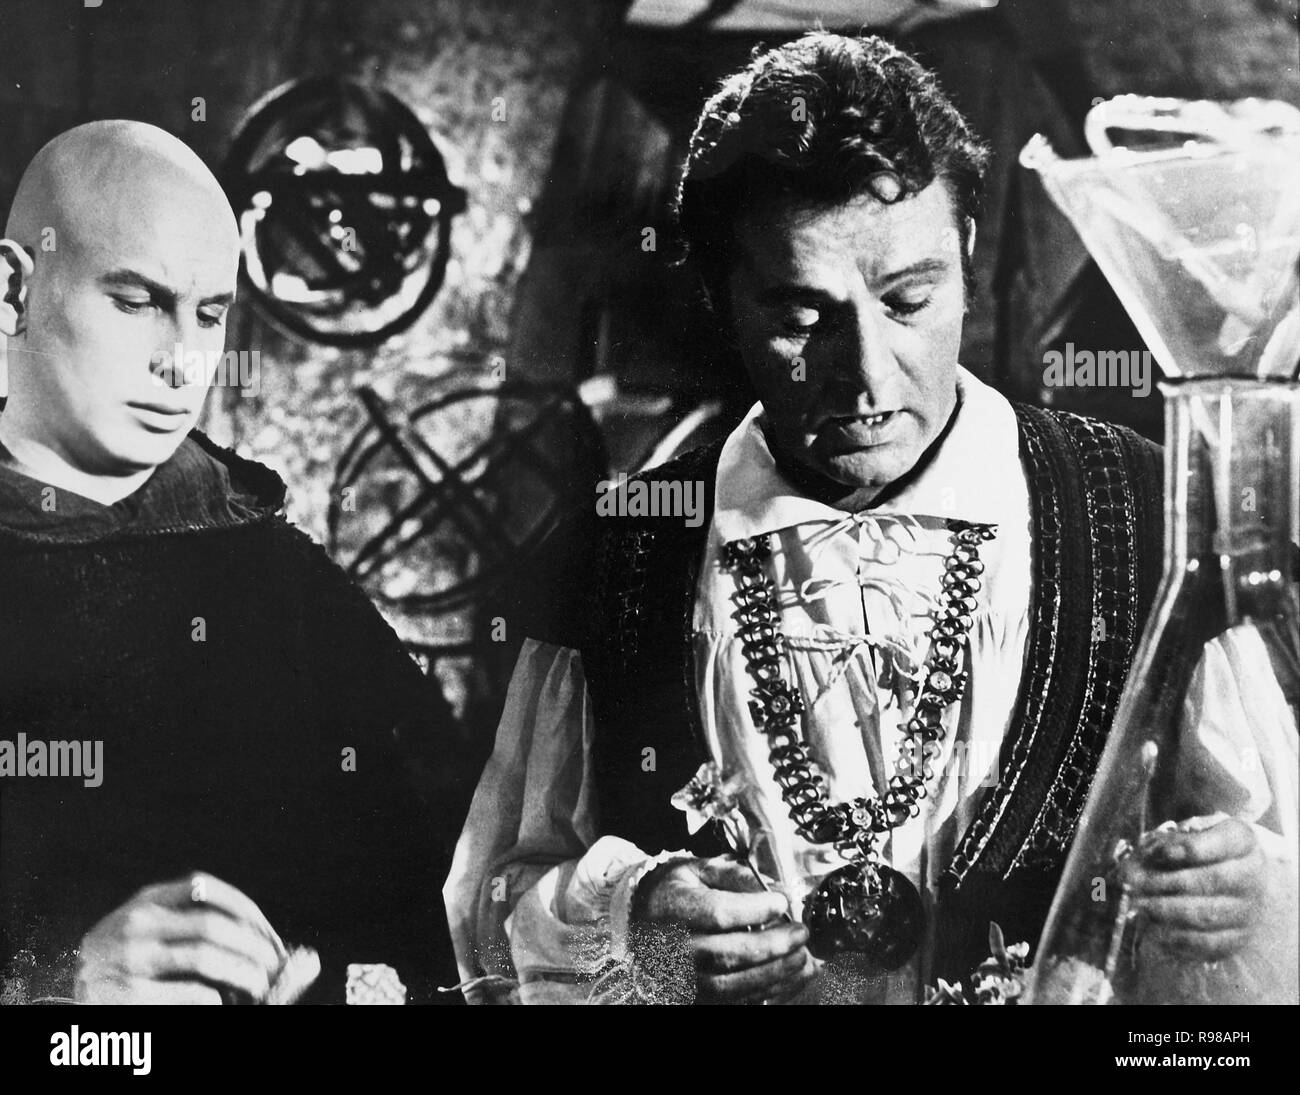 Original film title: DOCTOR FAUSTUS. English title: DOCTOR FAUSTUS. Year: 1967. Director: RICHARD BURTON. Stars: RICHARD BURTON. Credit: OXFORD UNIV/NASSAU/VENFILMS/COLUMBIA / Album Stock Photo